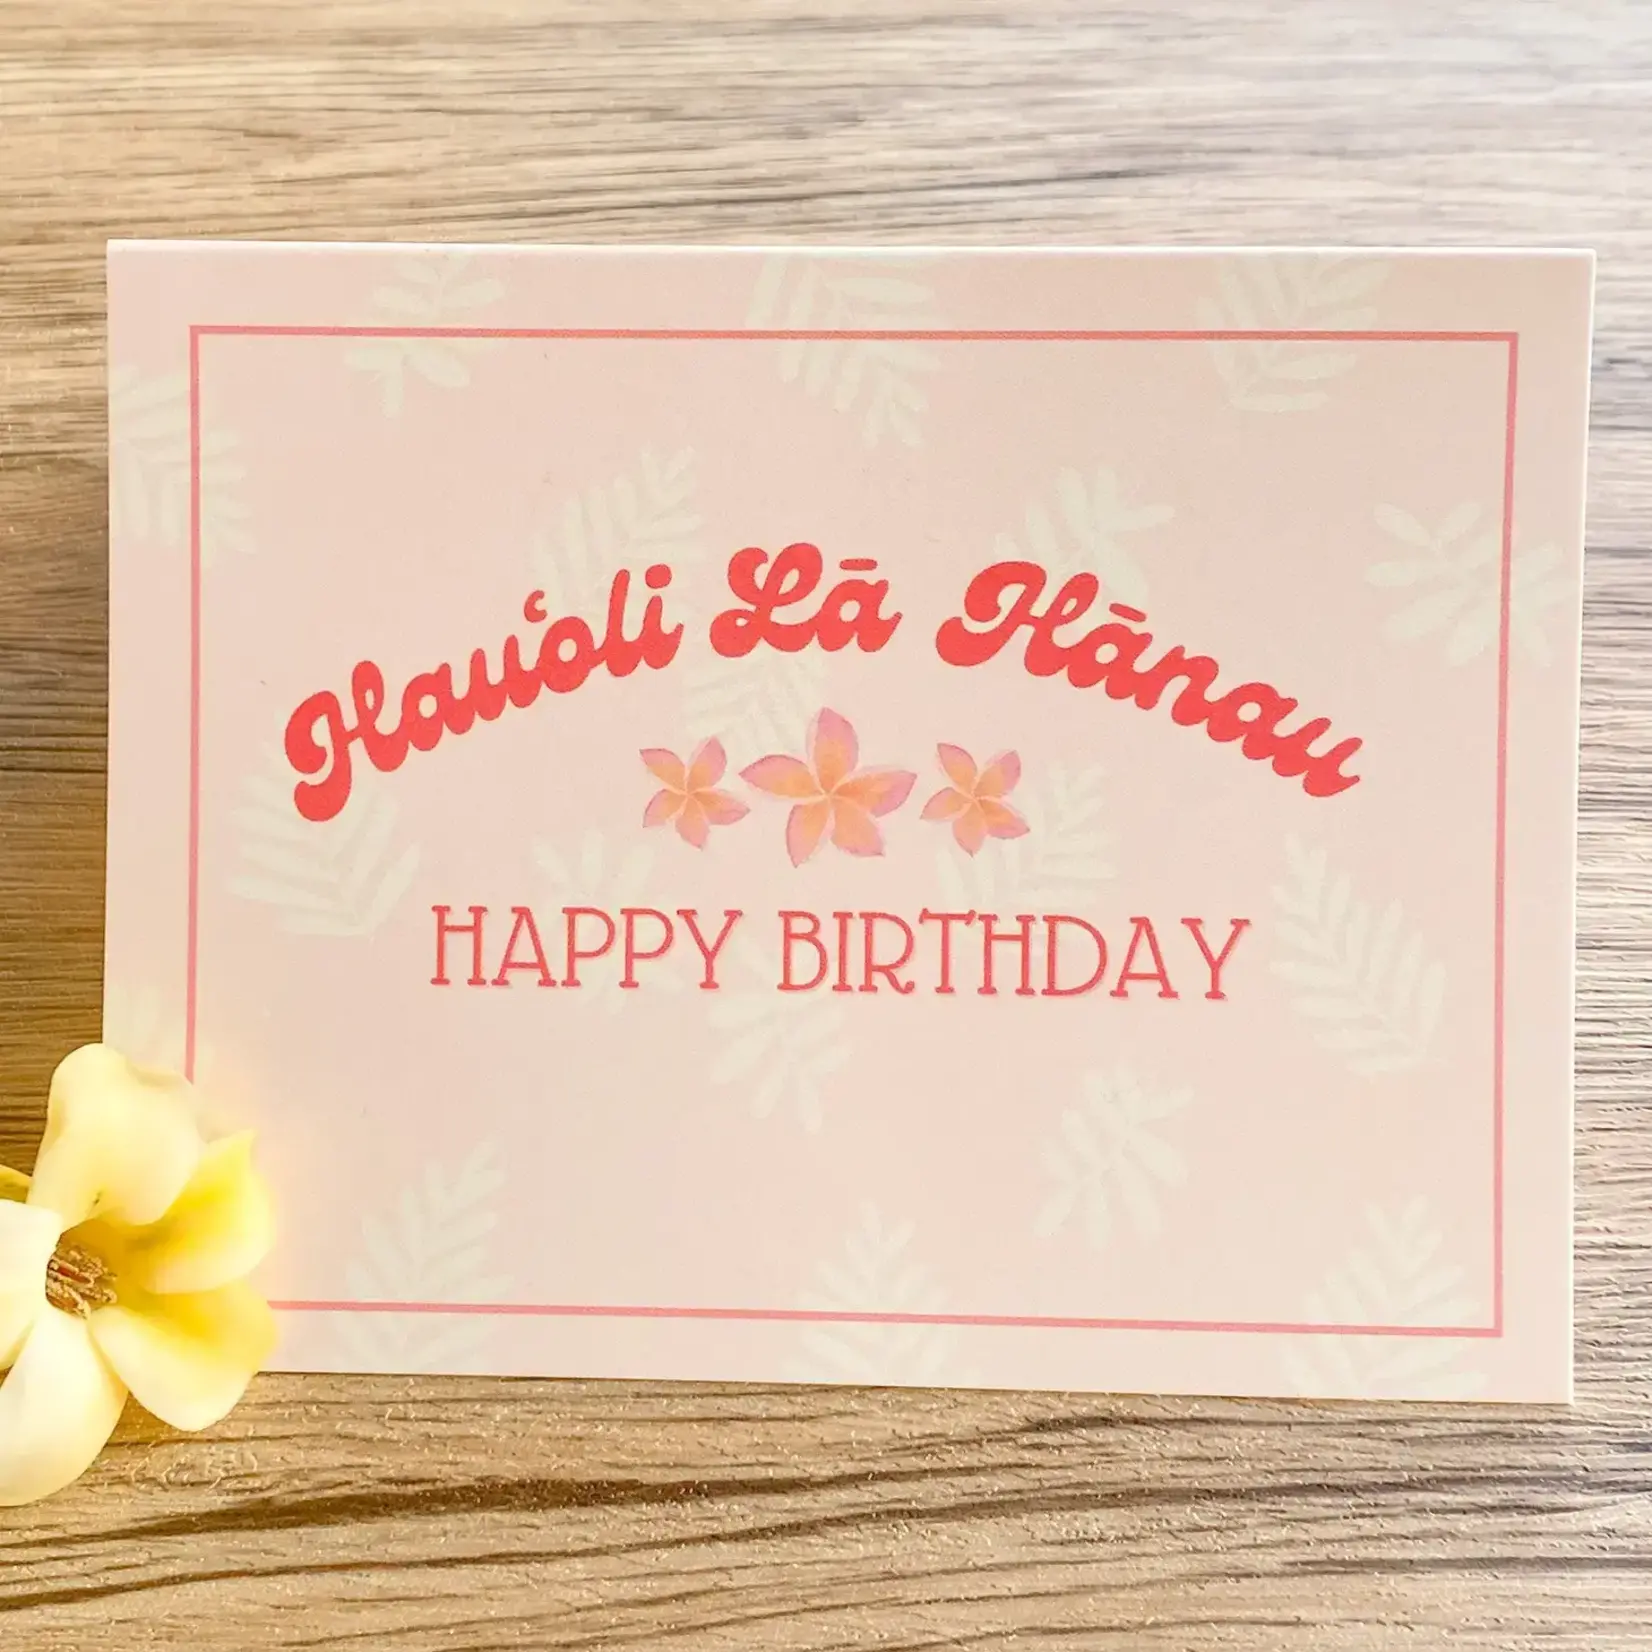 Design Jord Design Jord: Hauoli La Hanau - Happy Birthday Greeting Card